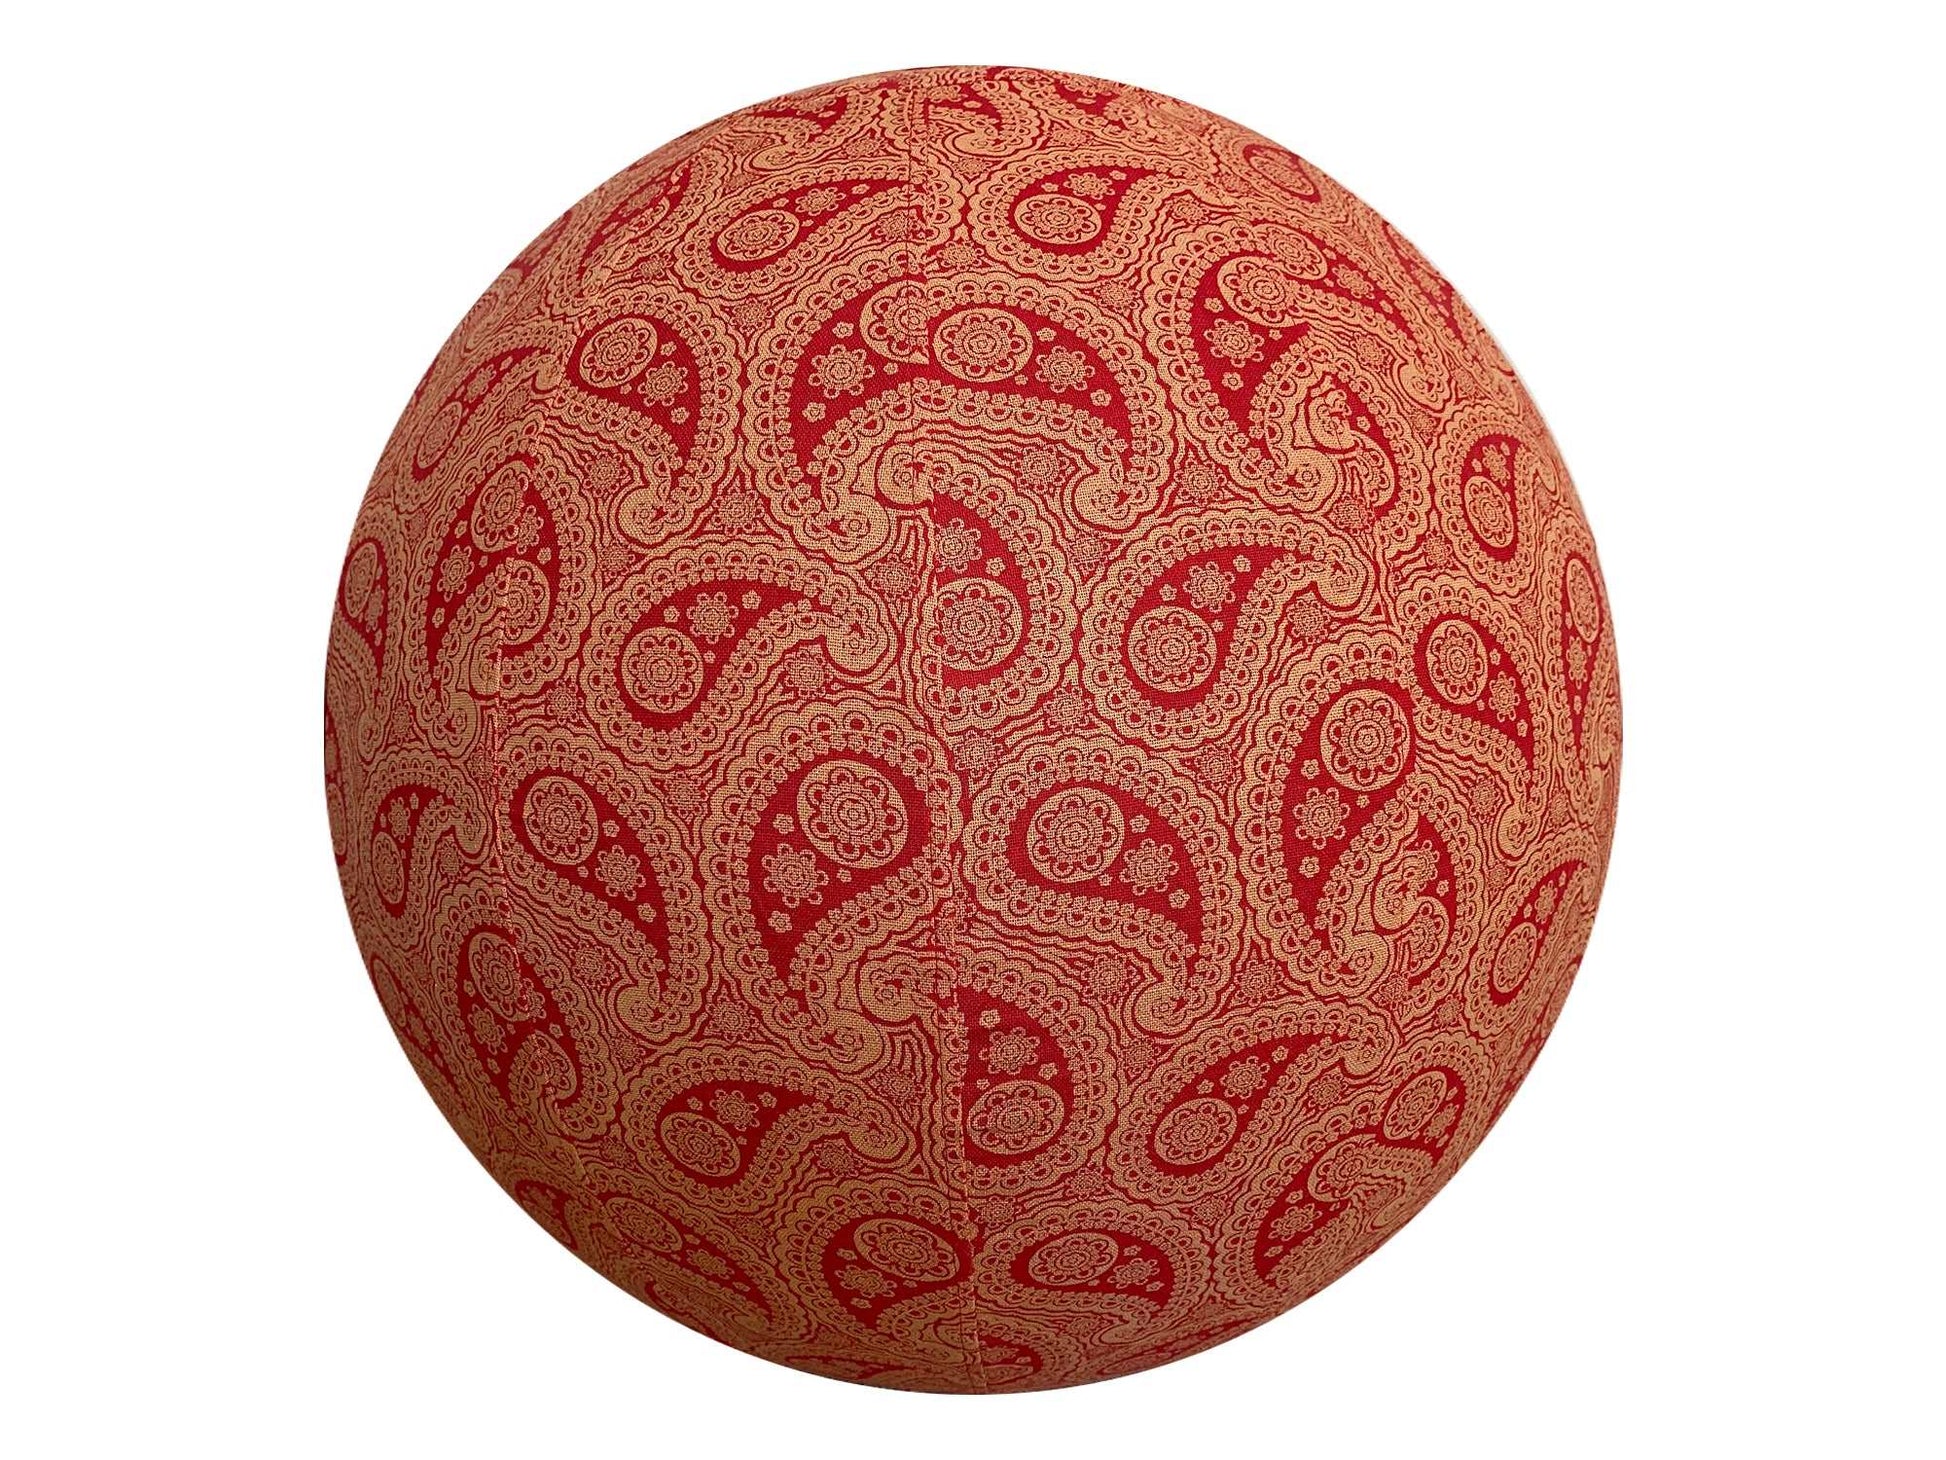 55cm Balance Ball / Yoga Ball Cover: Poppy Paisley